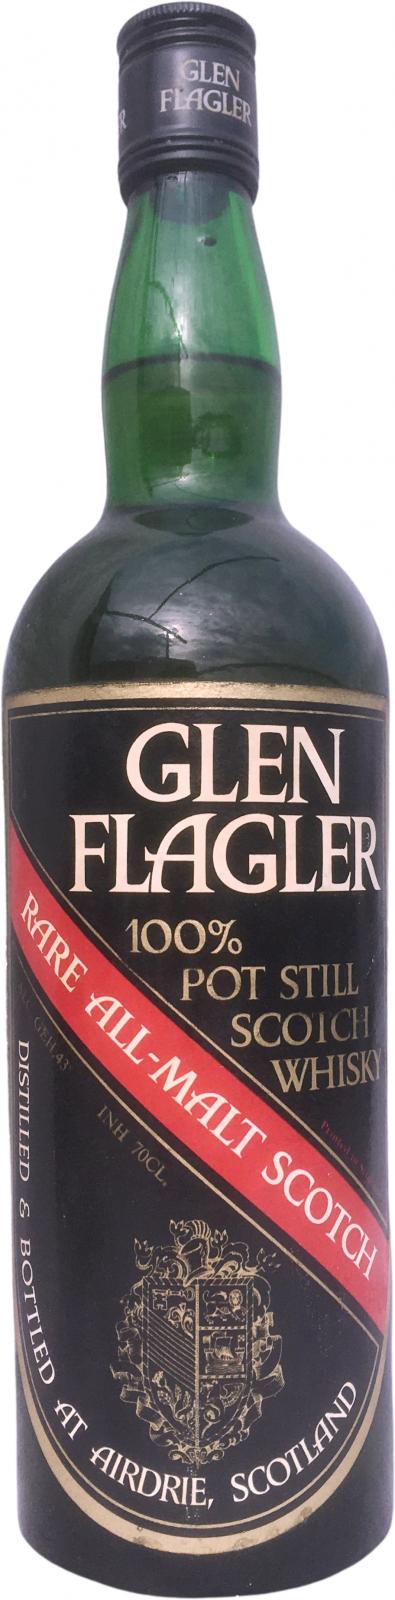 Glen Flagler Rare All-Malt Scotch 100% Pot Still Scotch Whisky 43% 700ml